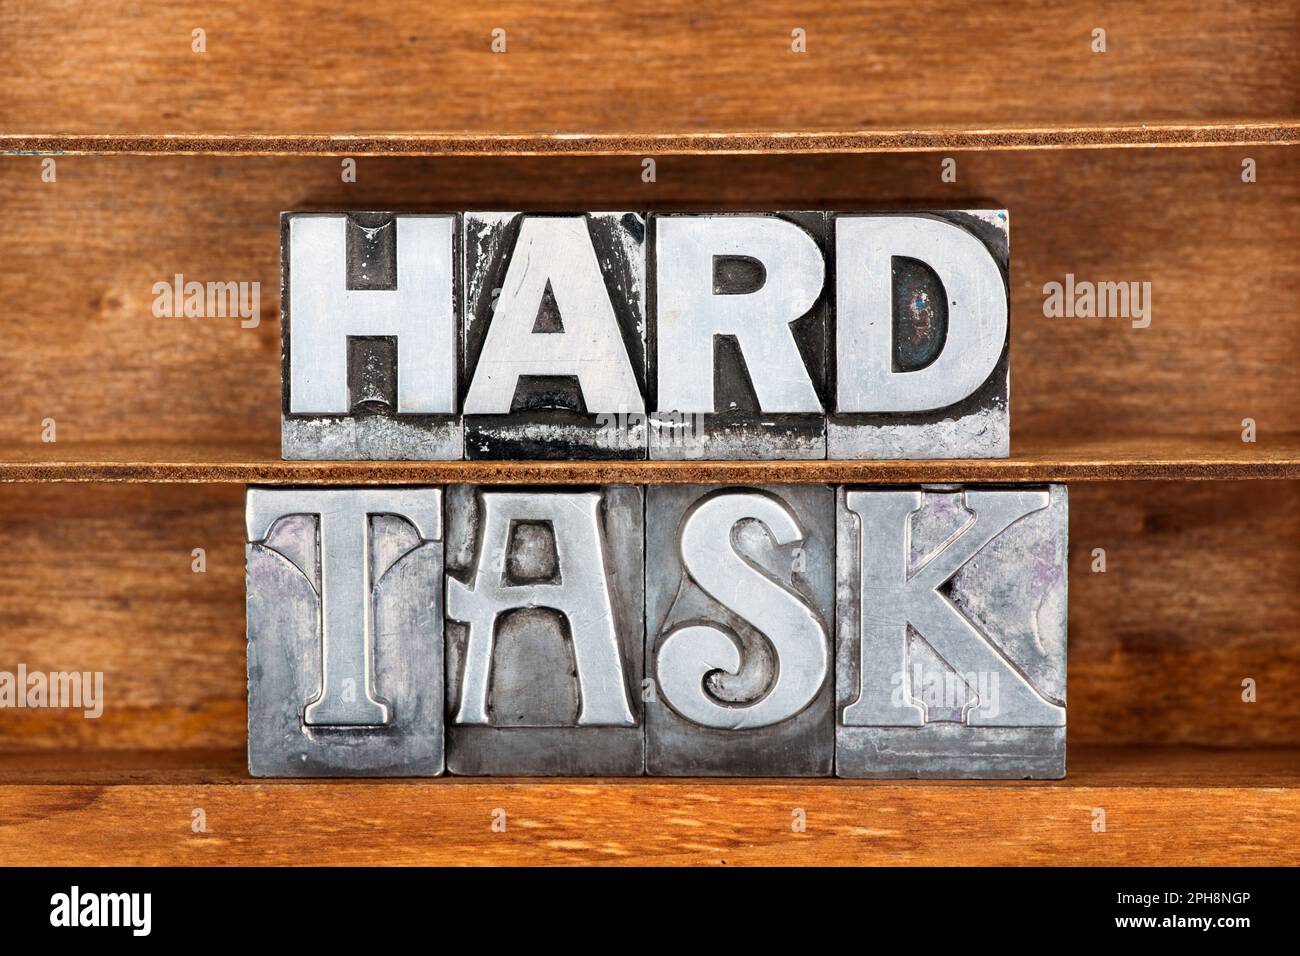 hard task phrase made from metallic letterpress type on wooden tray Stock Photo